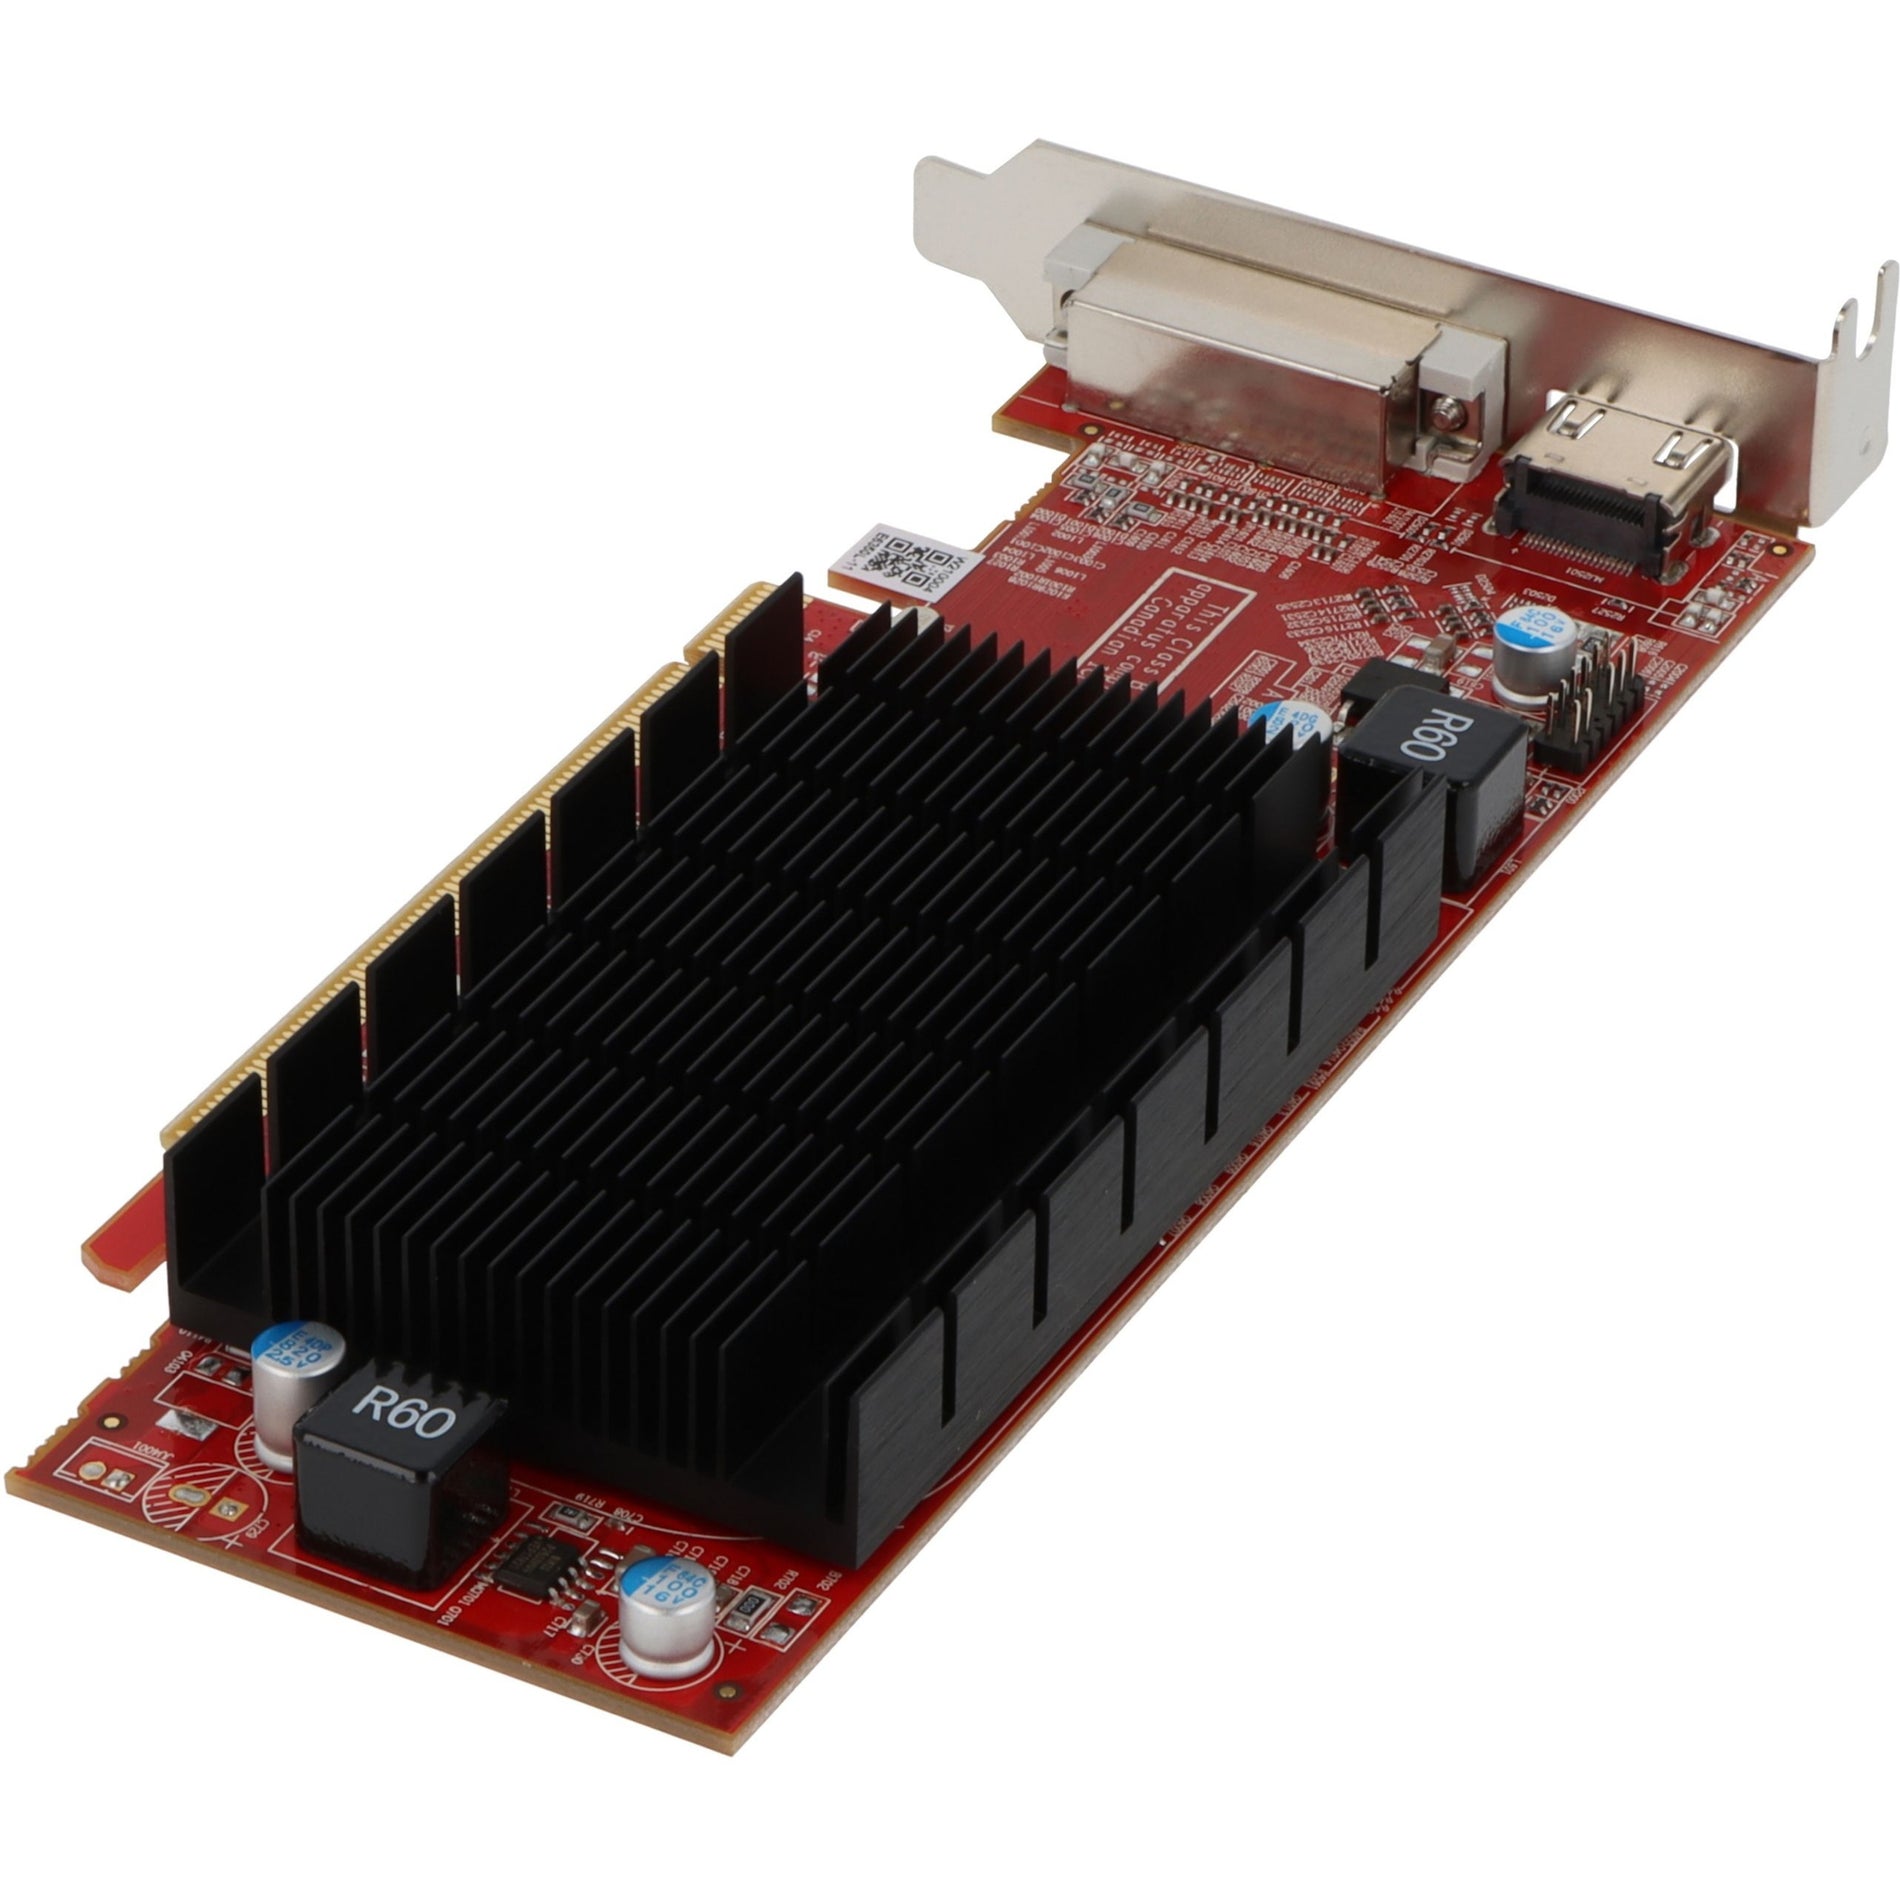 VisionTek 900484 Radeon 6350 SFF 1GB DDR3 Graphic Card, DVI-I, HDMI, VGA, DirectX 11.0